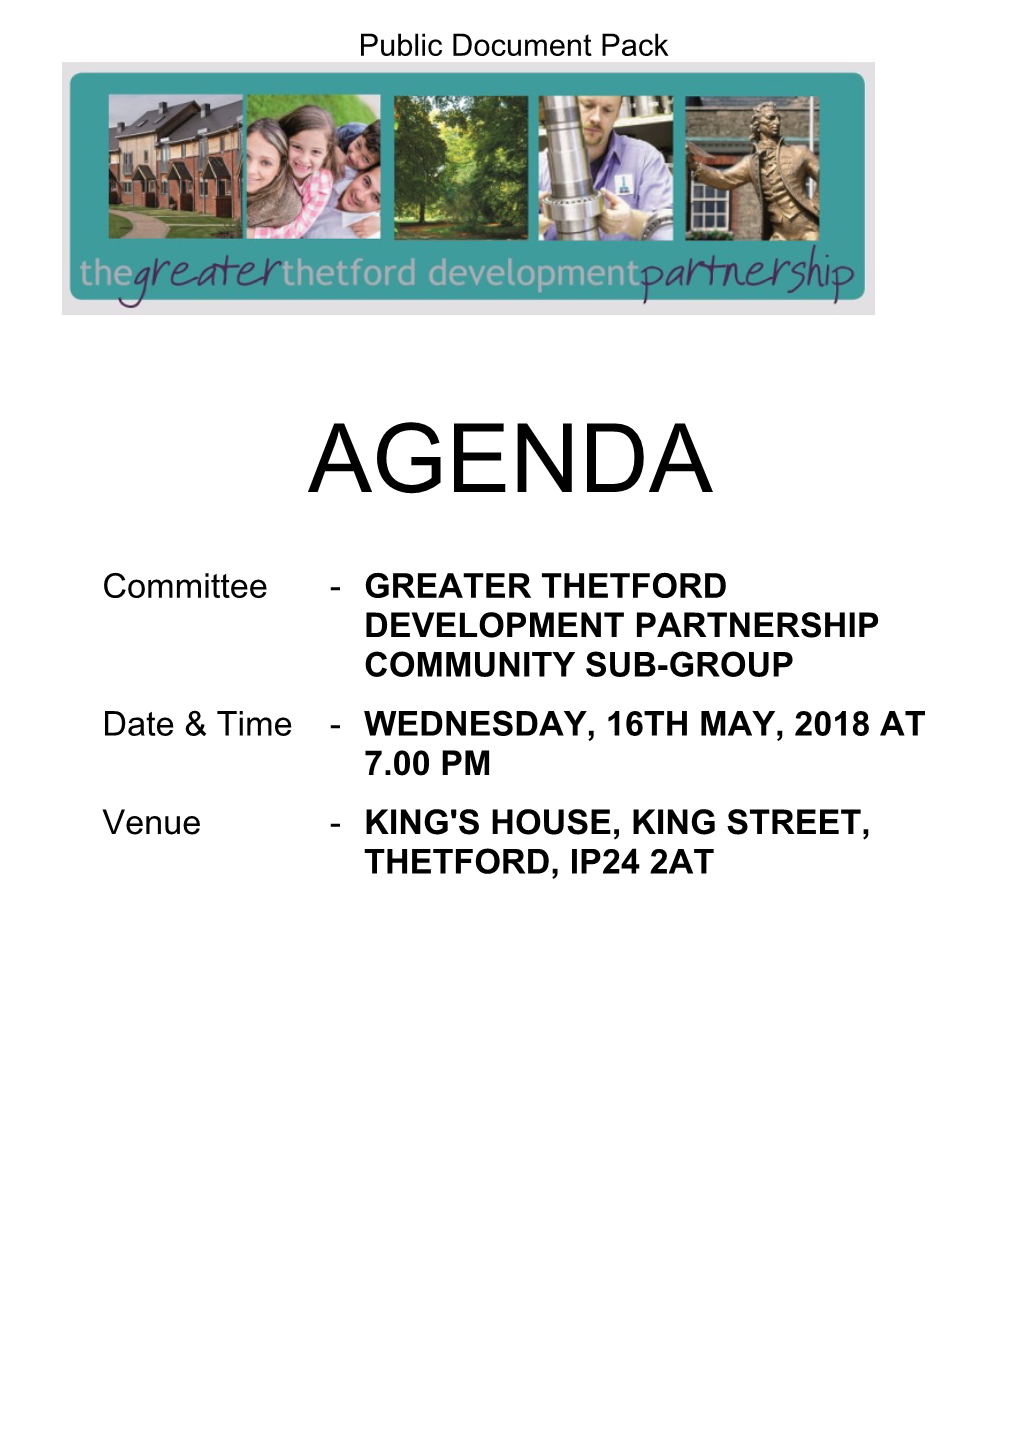 (Public Pack)Agenda Document for Greater Thetford Development